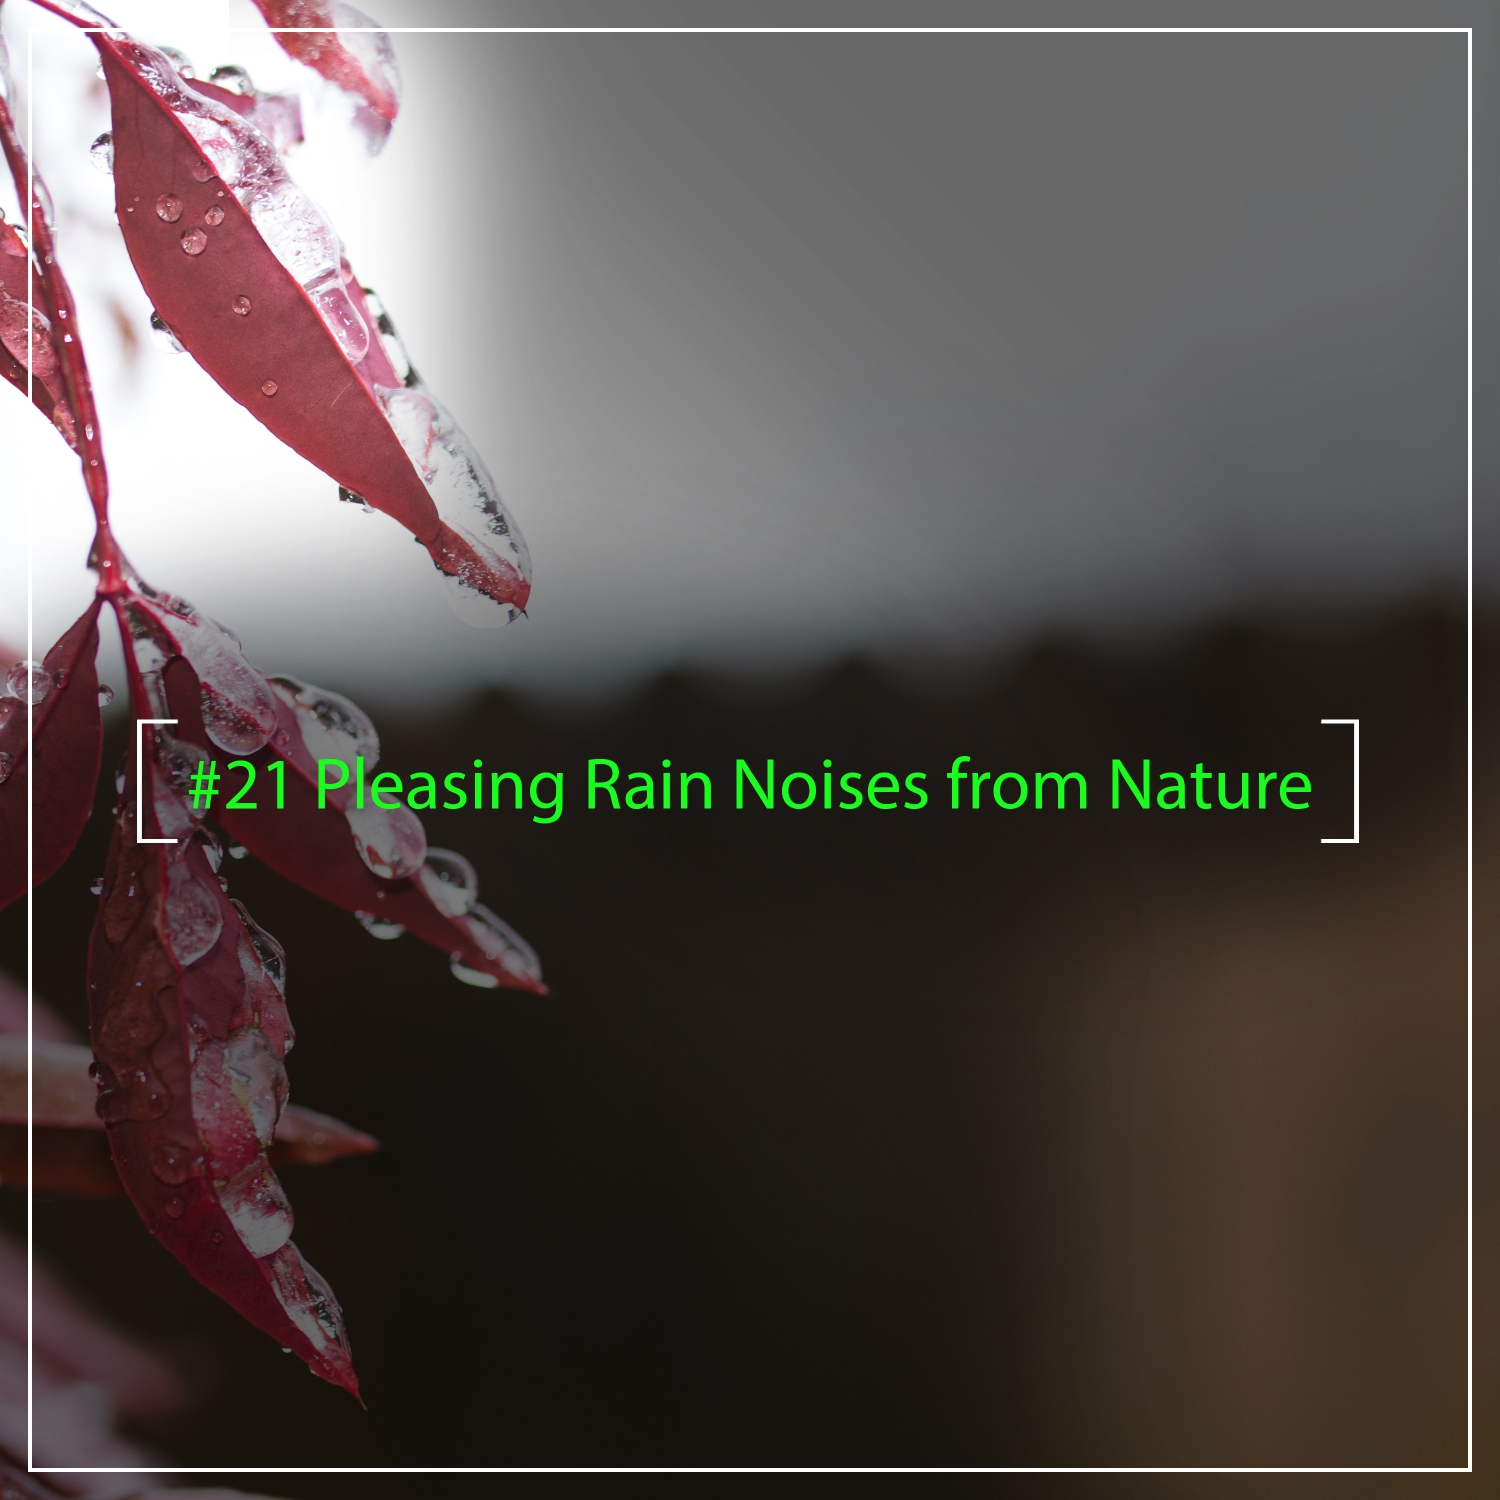 #21 Pleasing Rain Noises from Nature